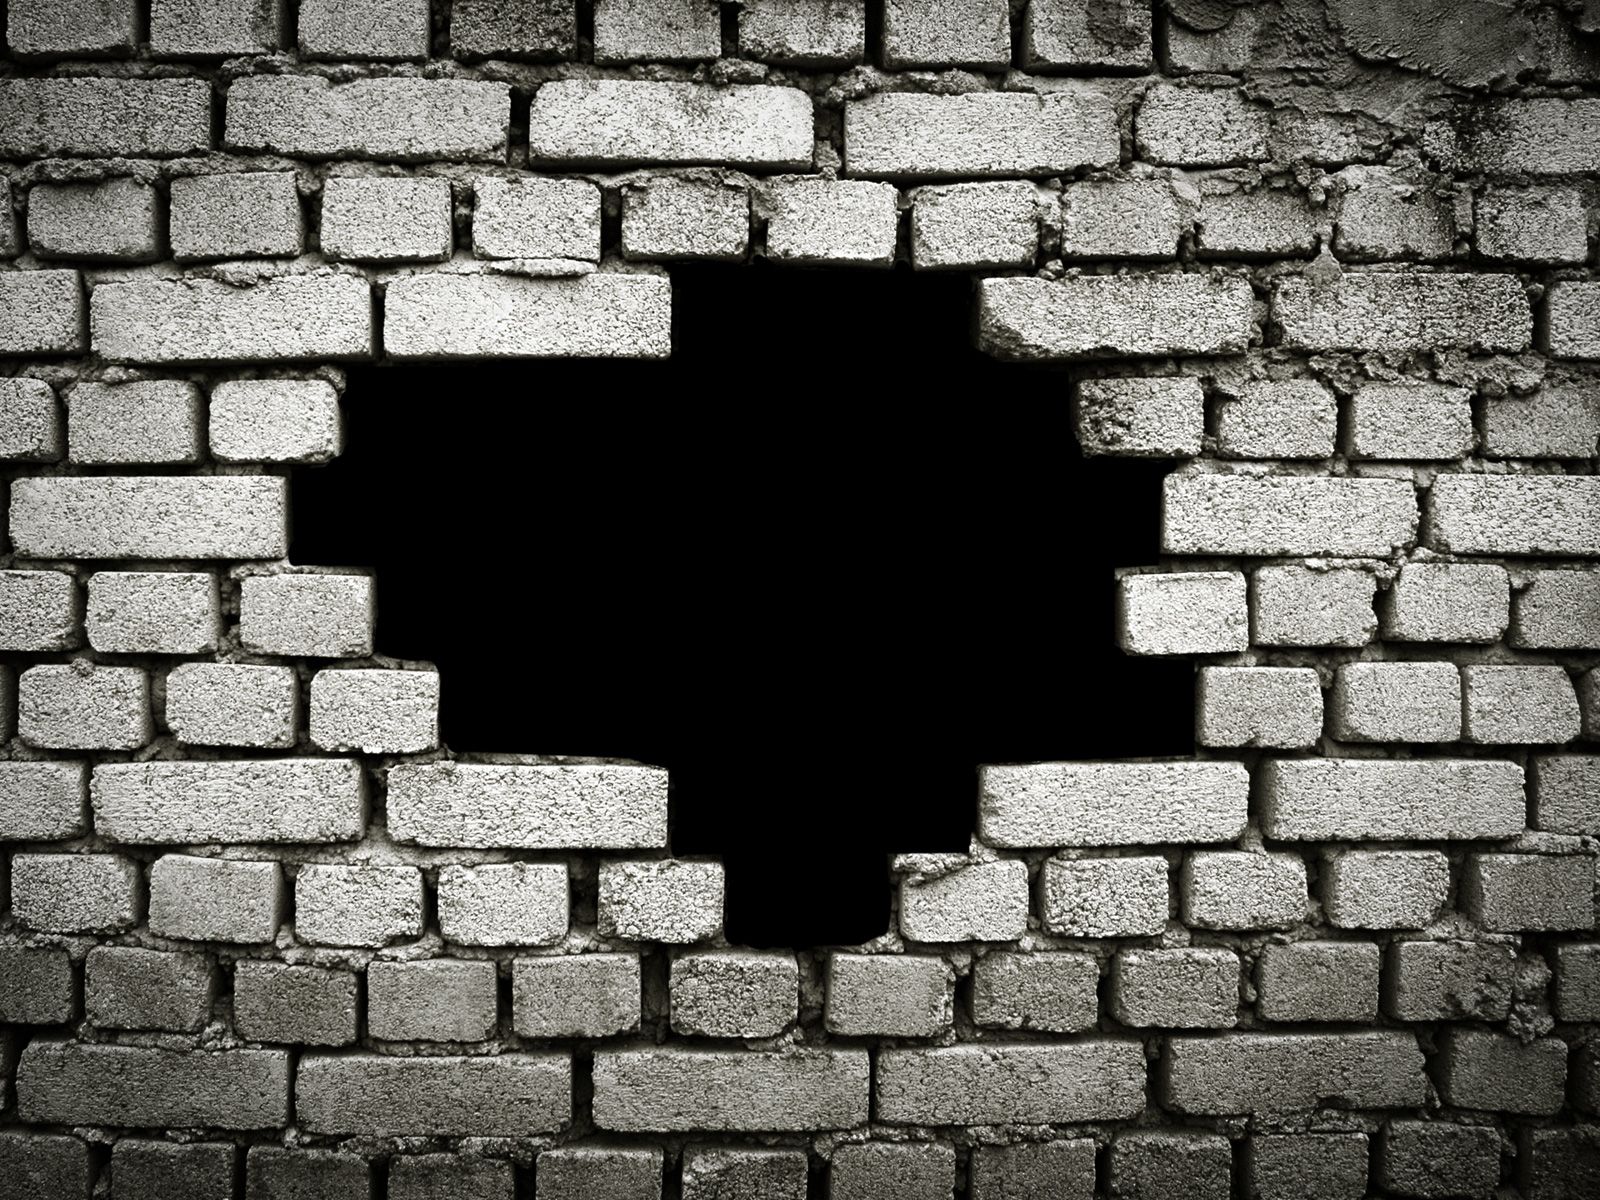 broken brick wall - Google Search | Vbs | Pinterest | Bricks